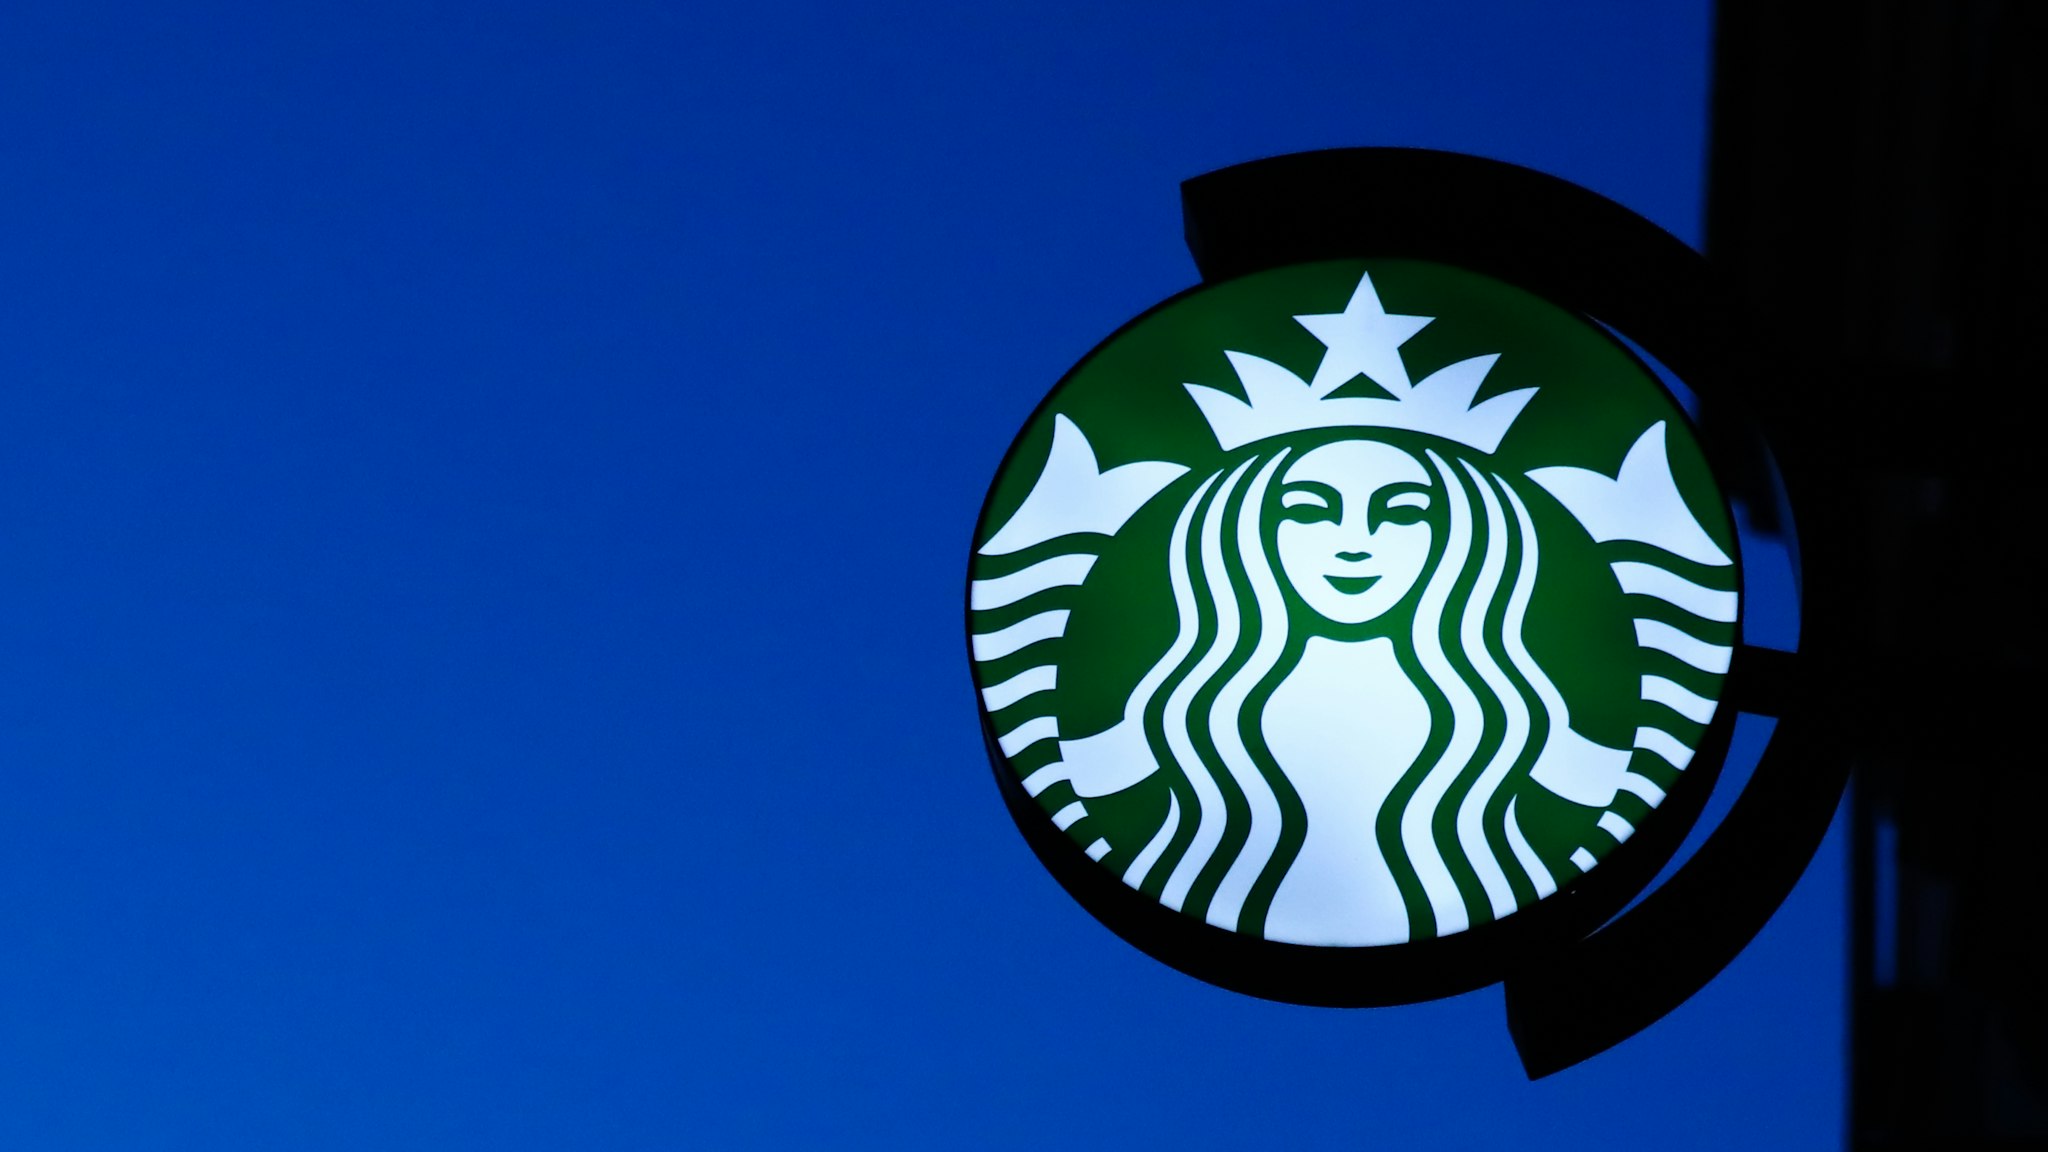 Starbucks Coffee logo is seen in Krakow , Poland on 27 October 2019 . (Photo by Jakub Porzycki/NurPhoto via Getty Images)